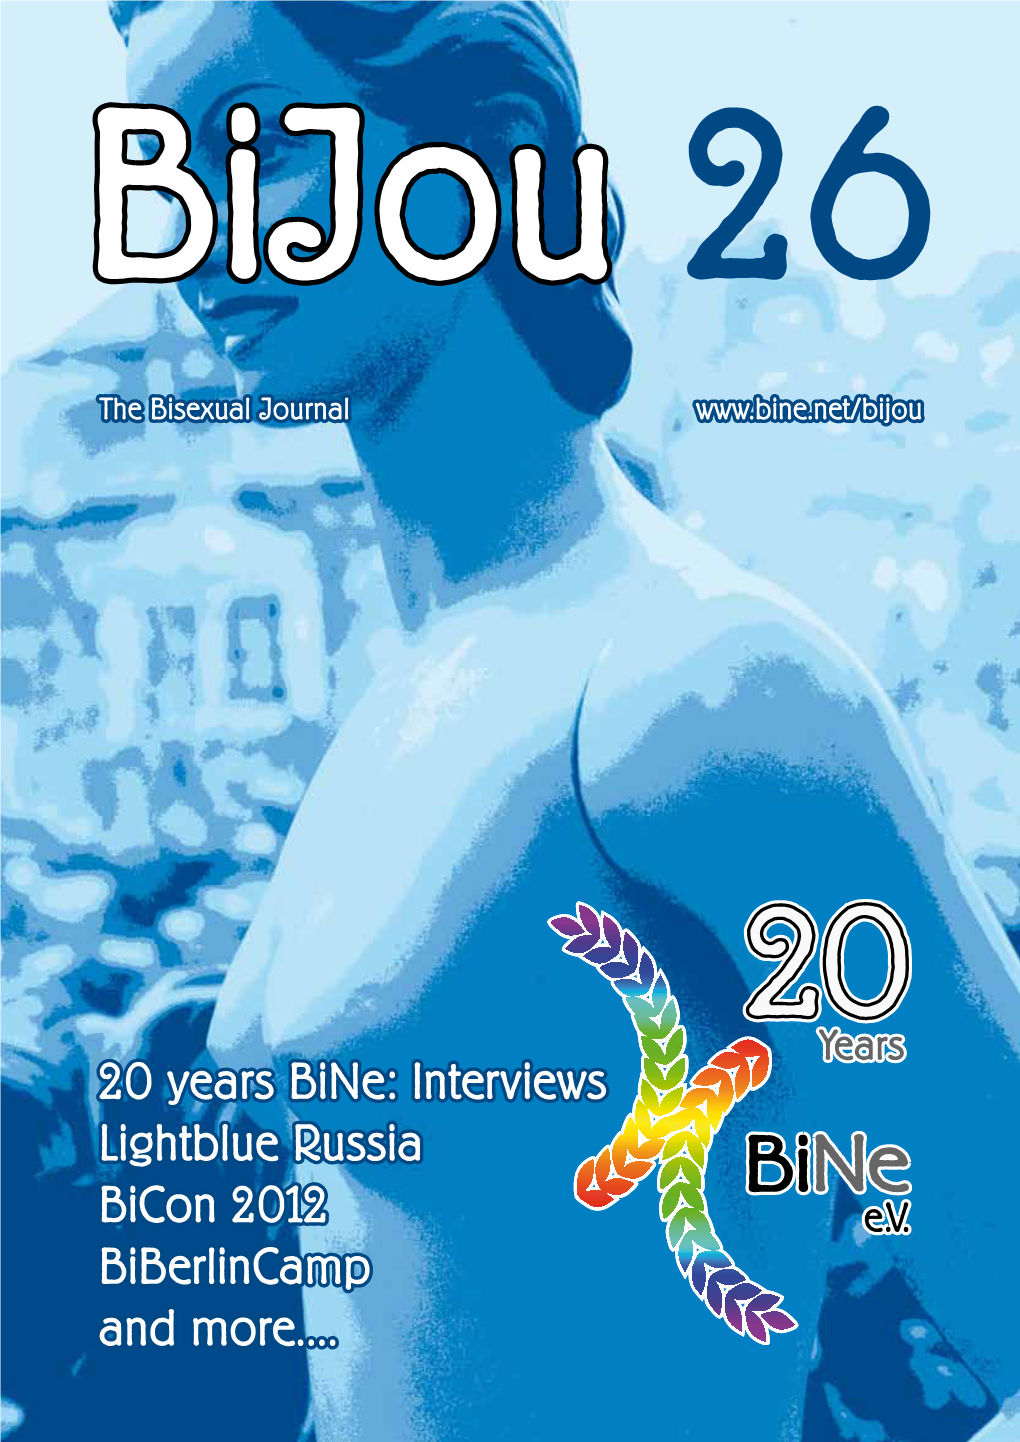 20 Years Bine: Interviews Lightblue Russia Bicon 2012 Biberlincamp and More